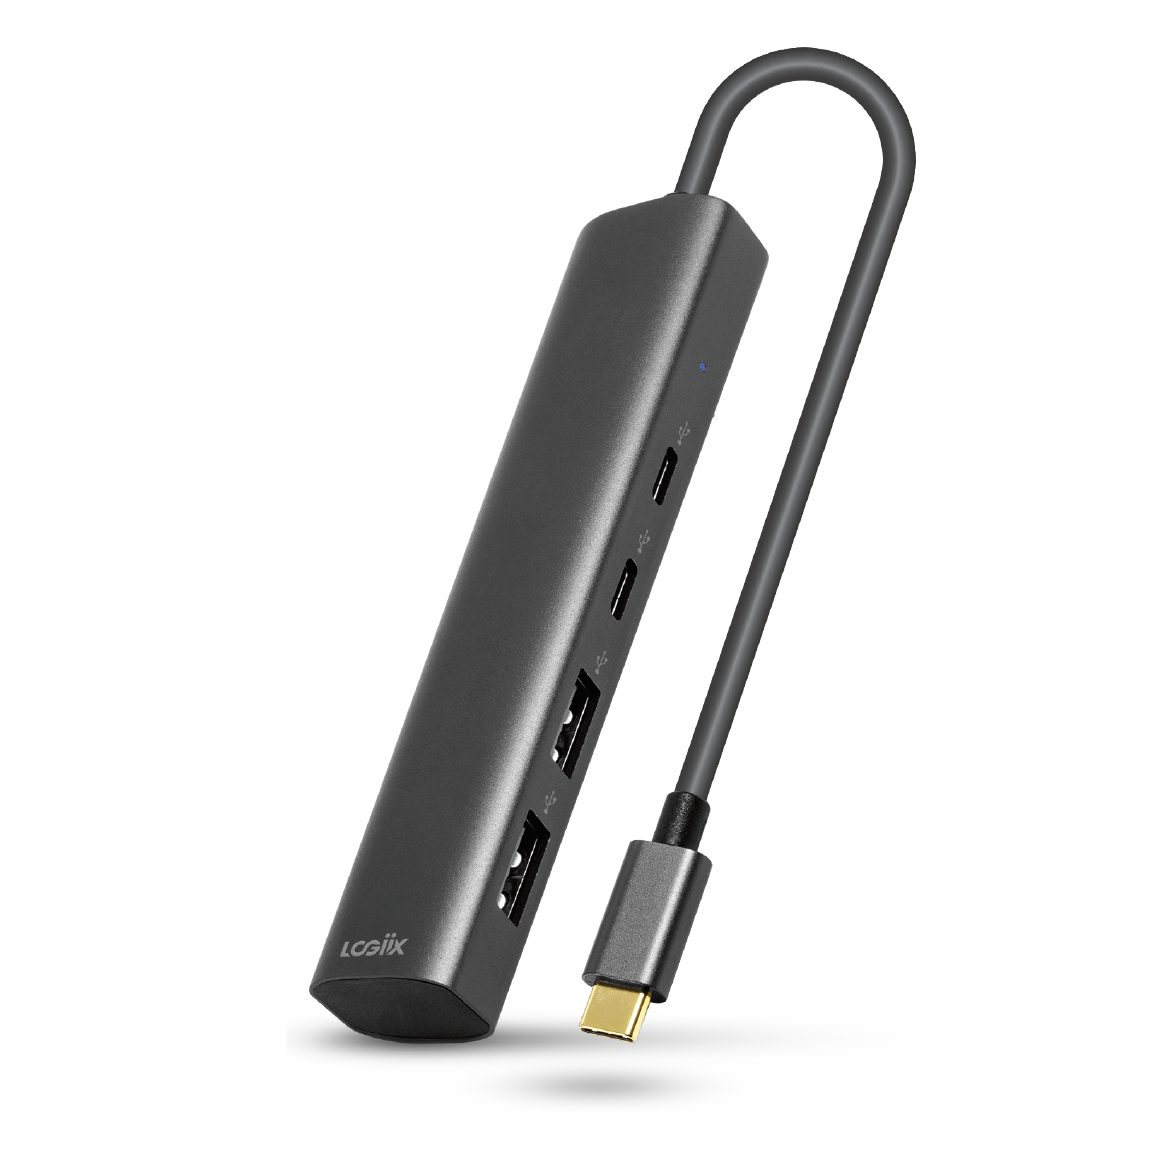 USB Type-C to Multiport Slim Hub